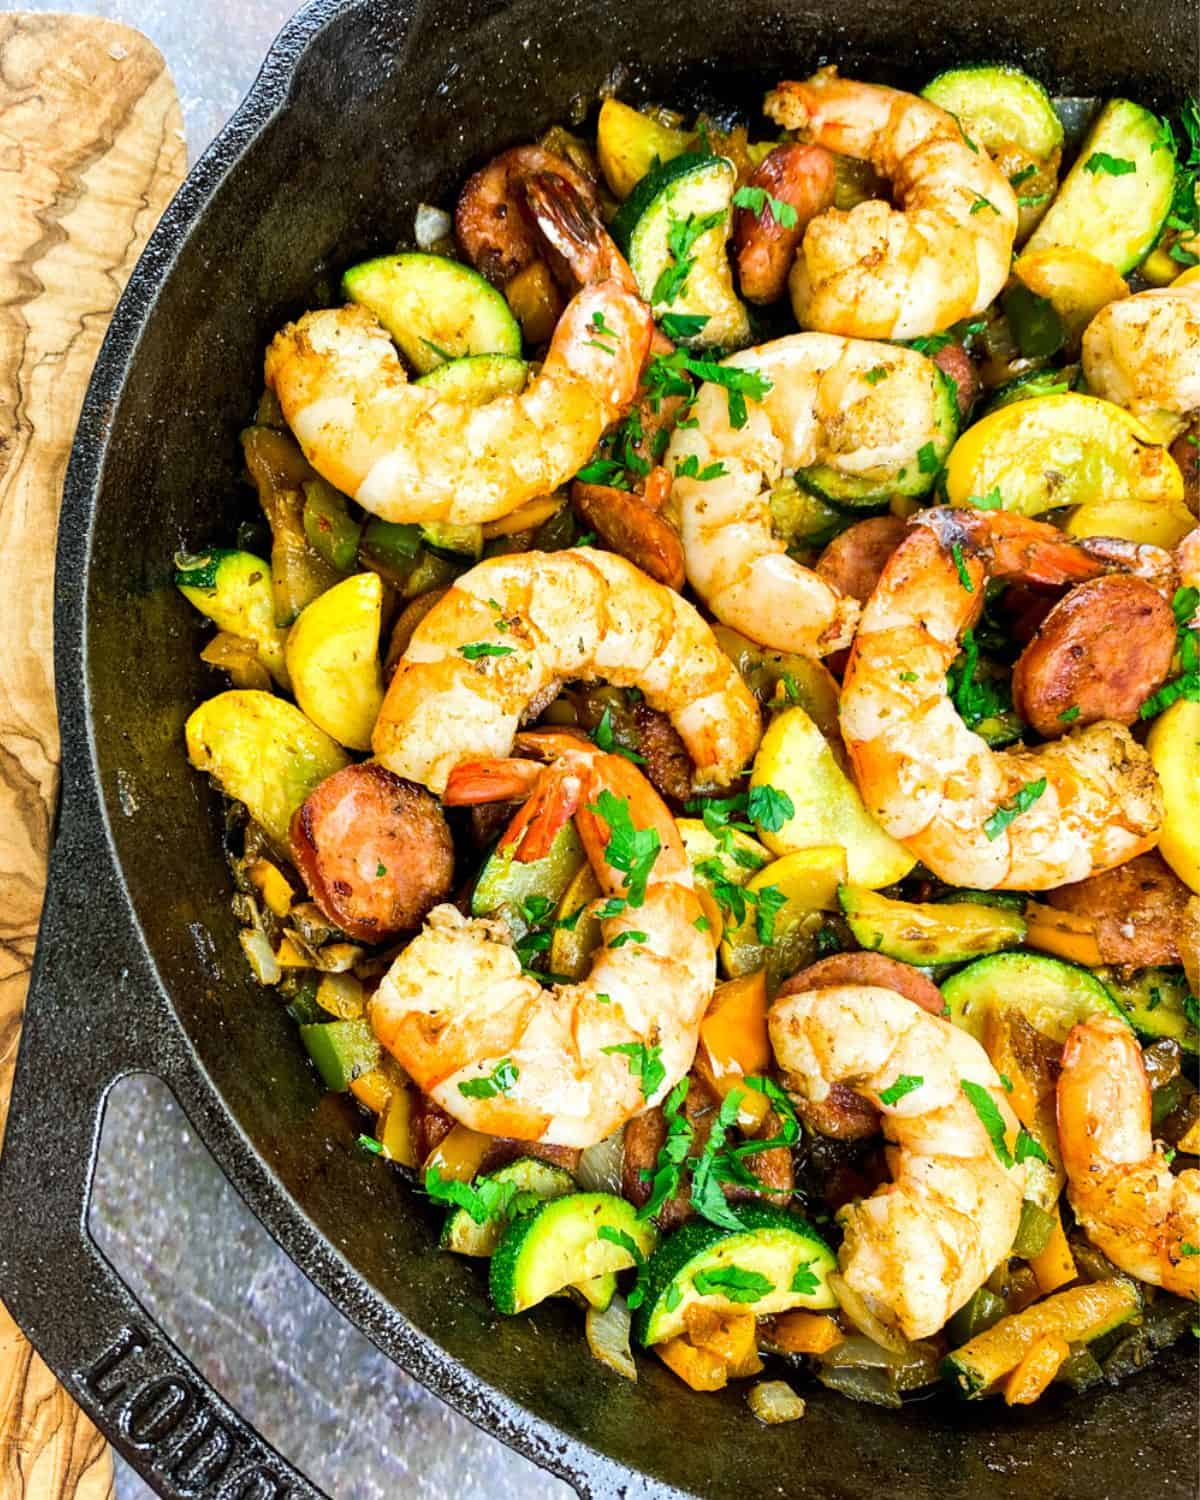 A cast iron pan with sauteed veggies, sausage and large cooked shrimp with cajun seasoning.